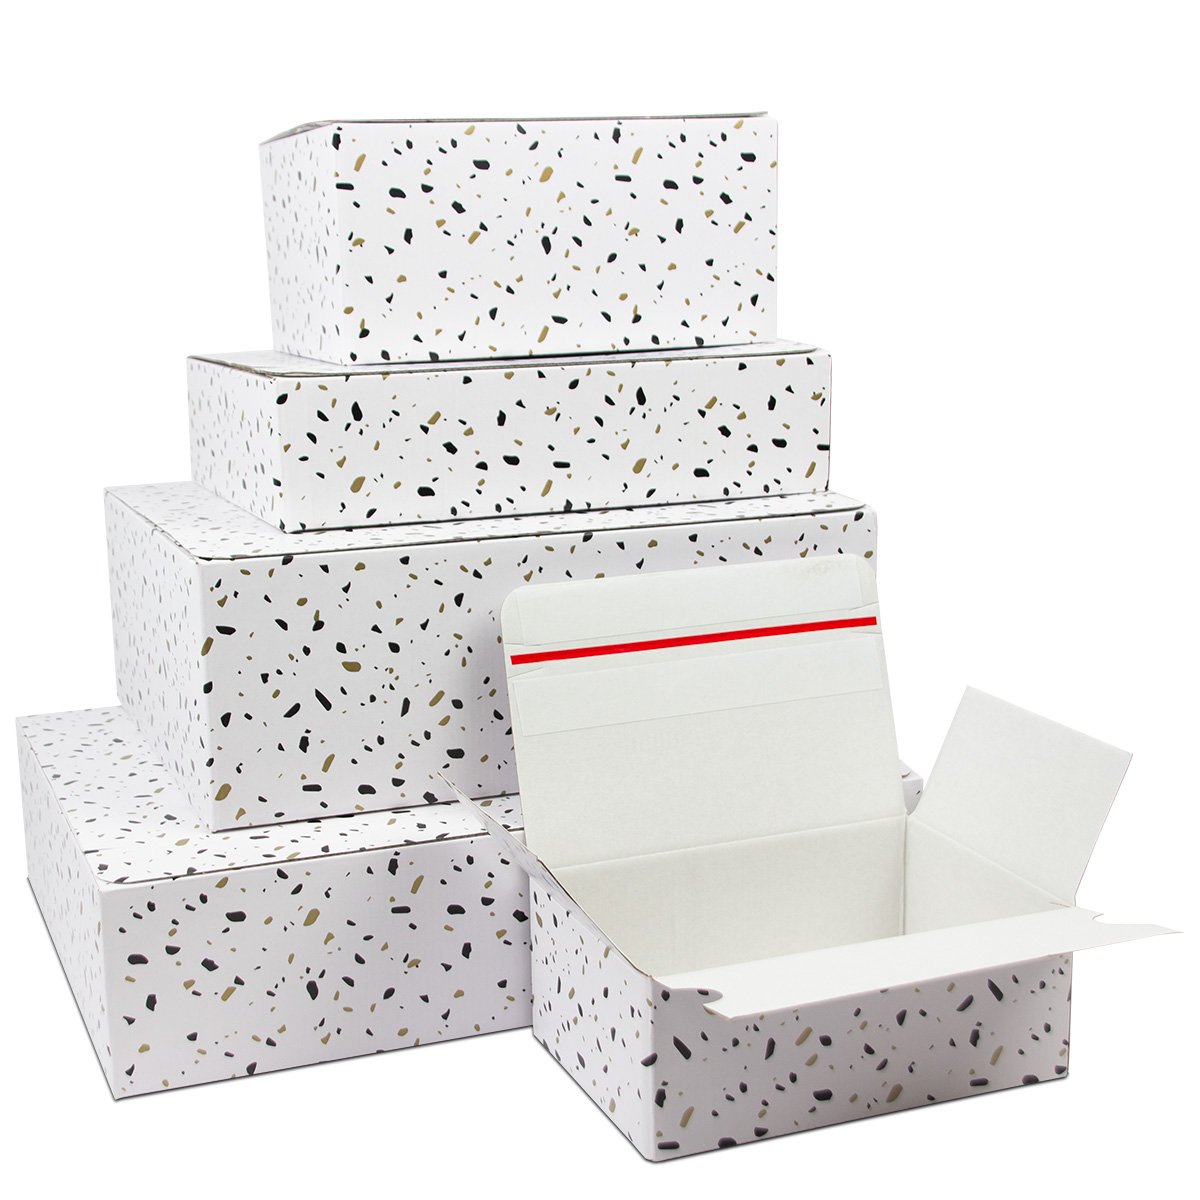 Confetti borrel boxen met plakstrip - groep